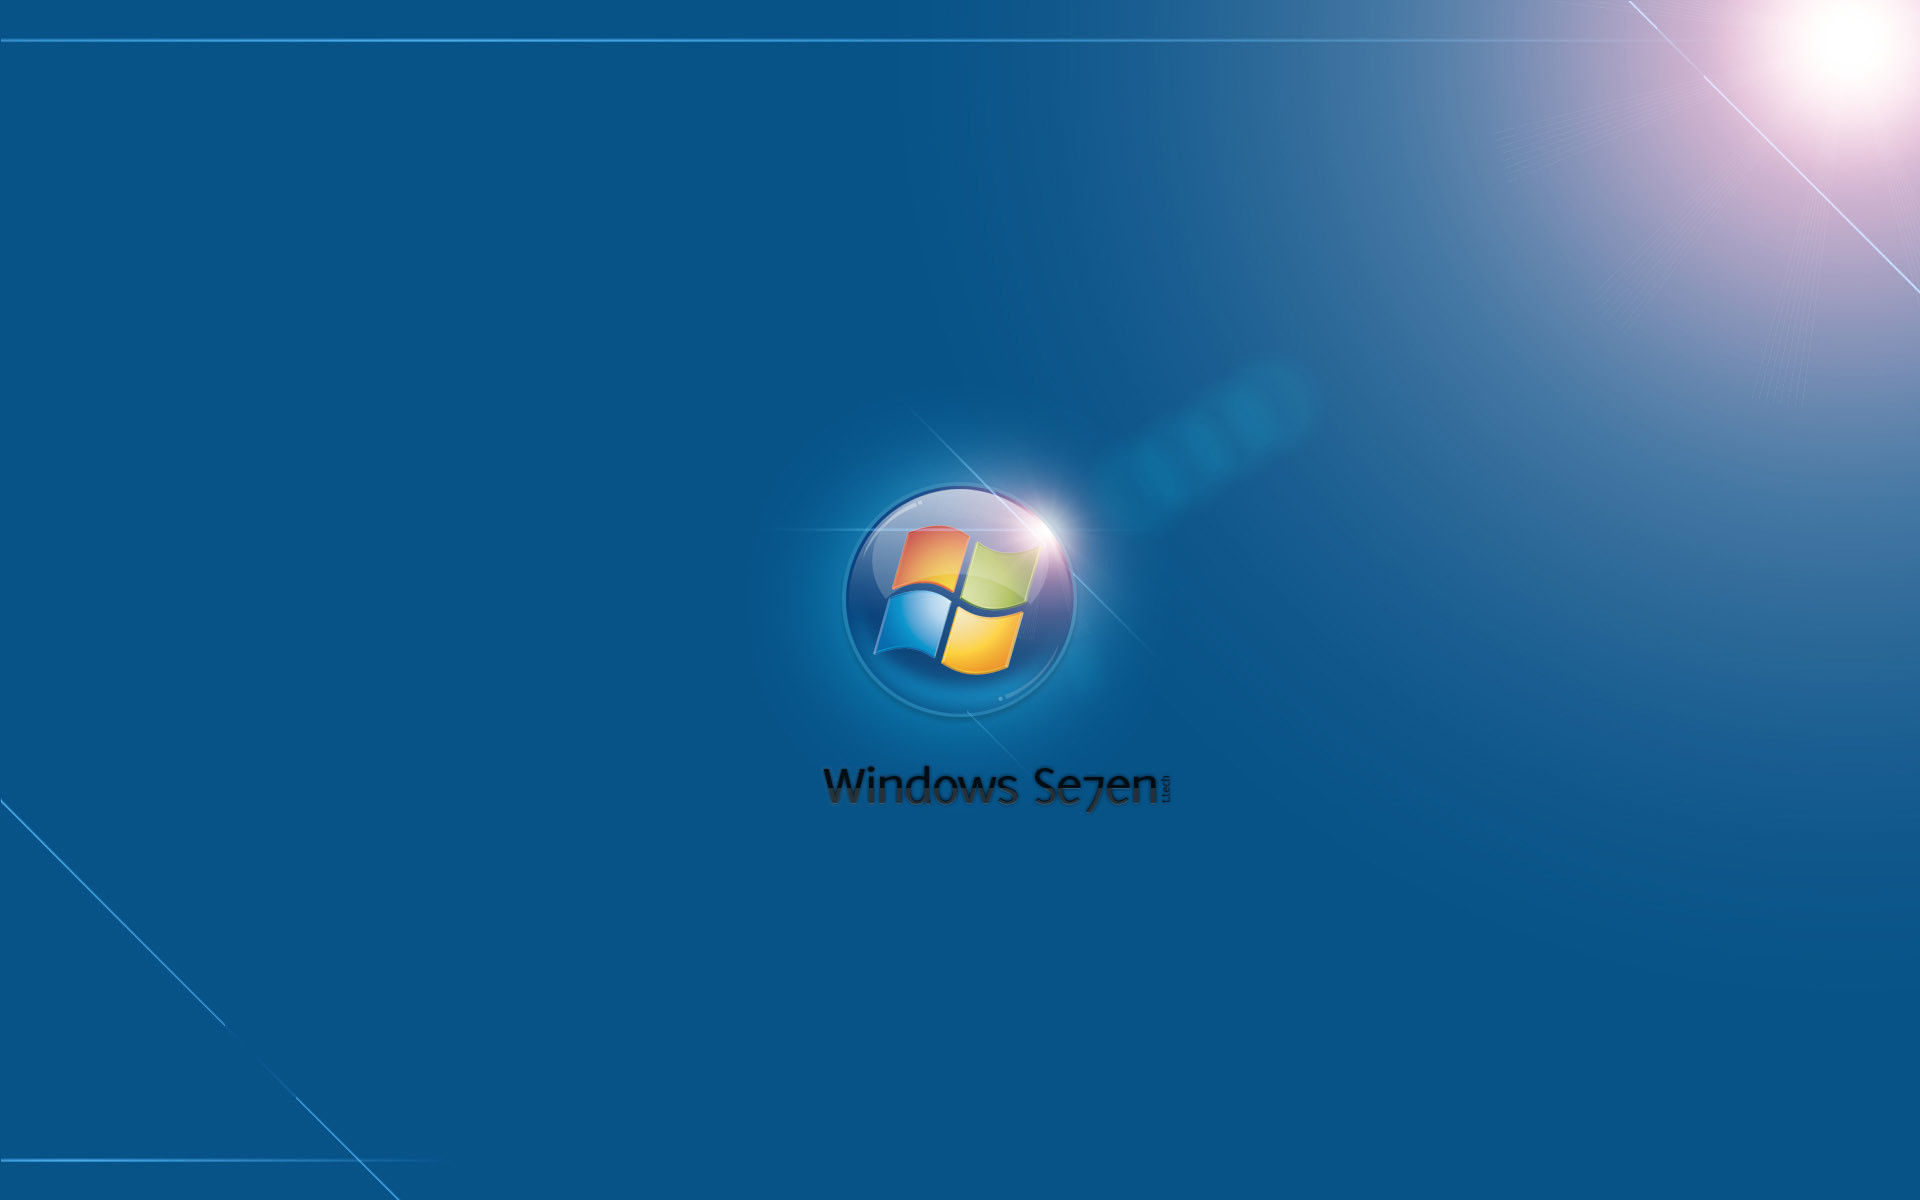 Windows 7 Original Backgrounds Group 69